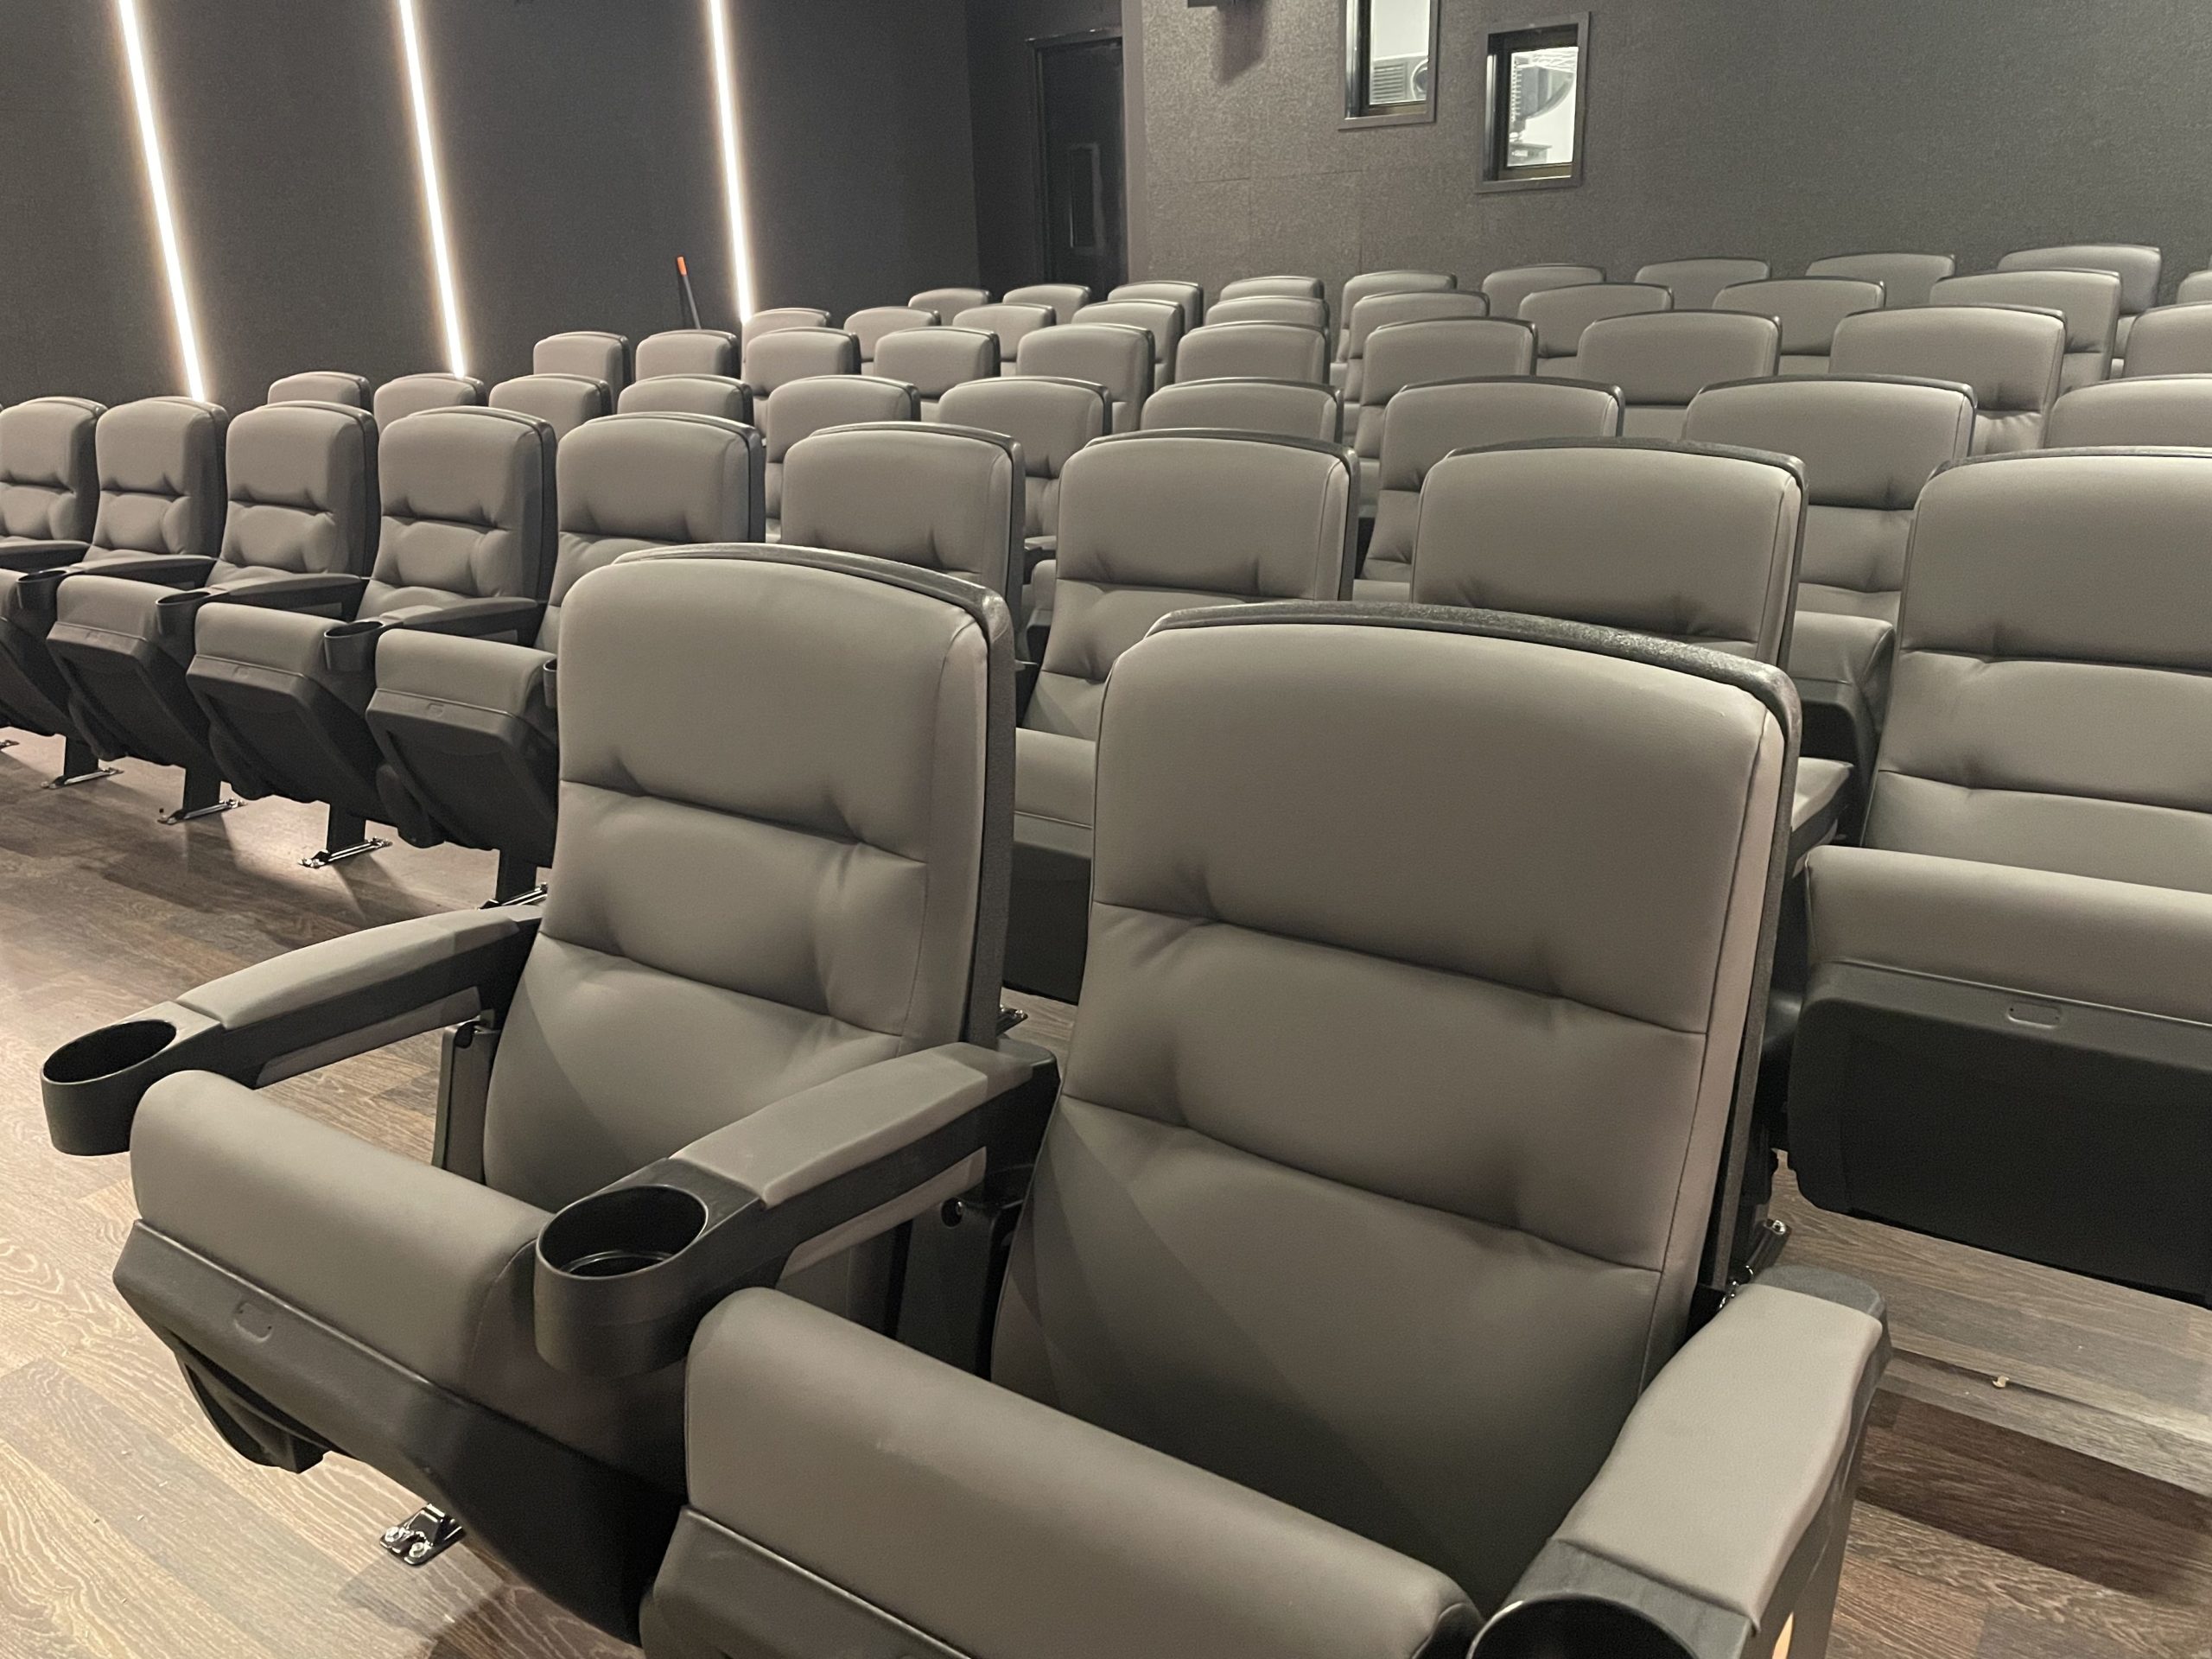 Cinema 3 seat installation